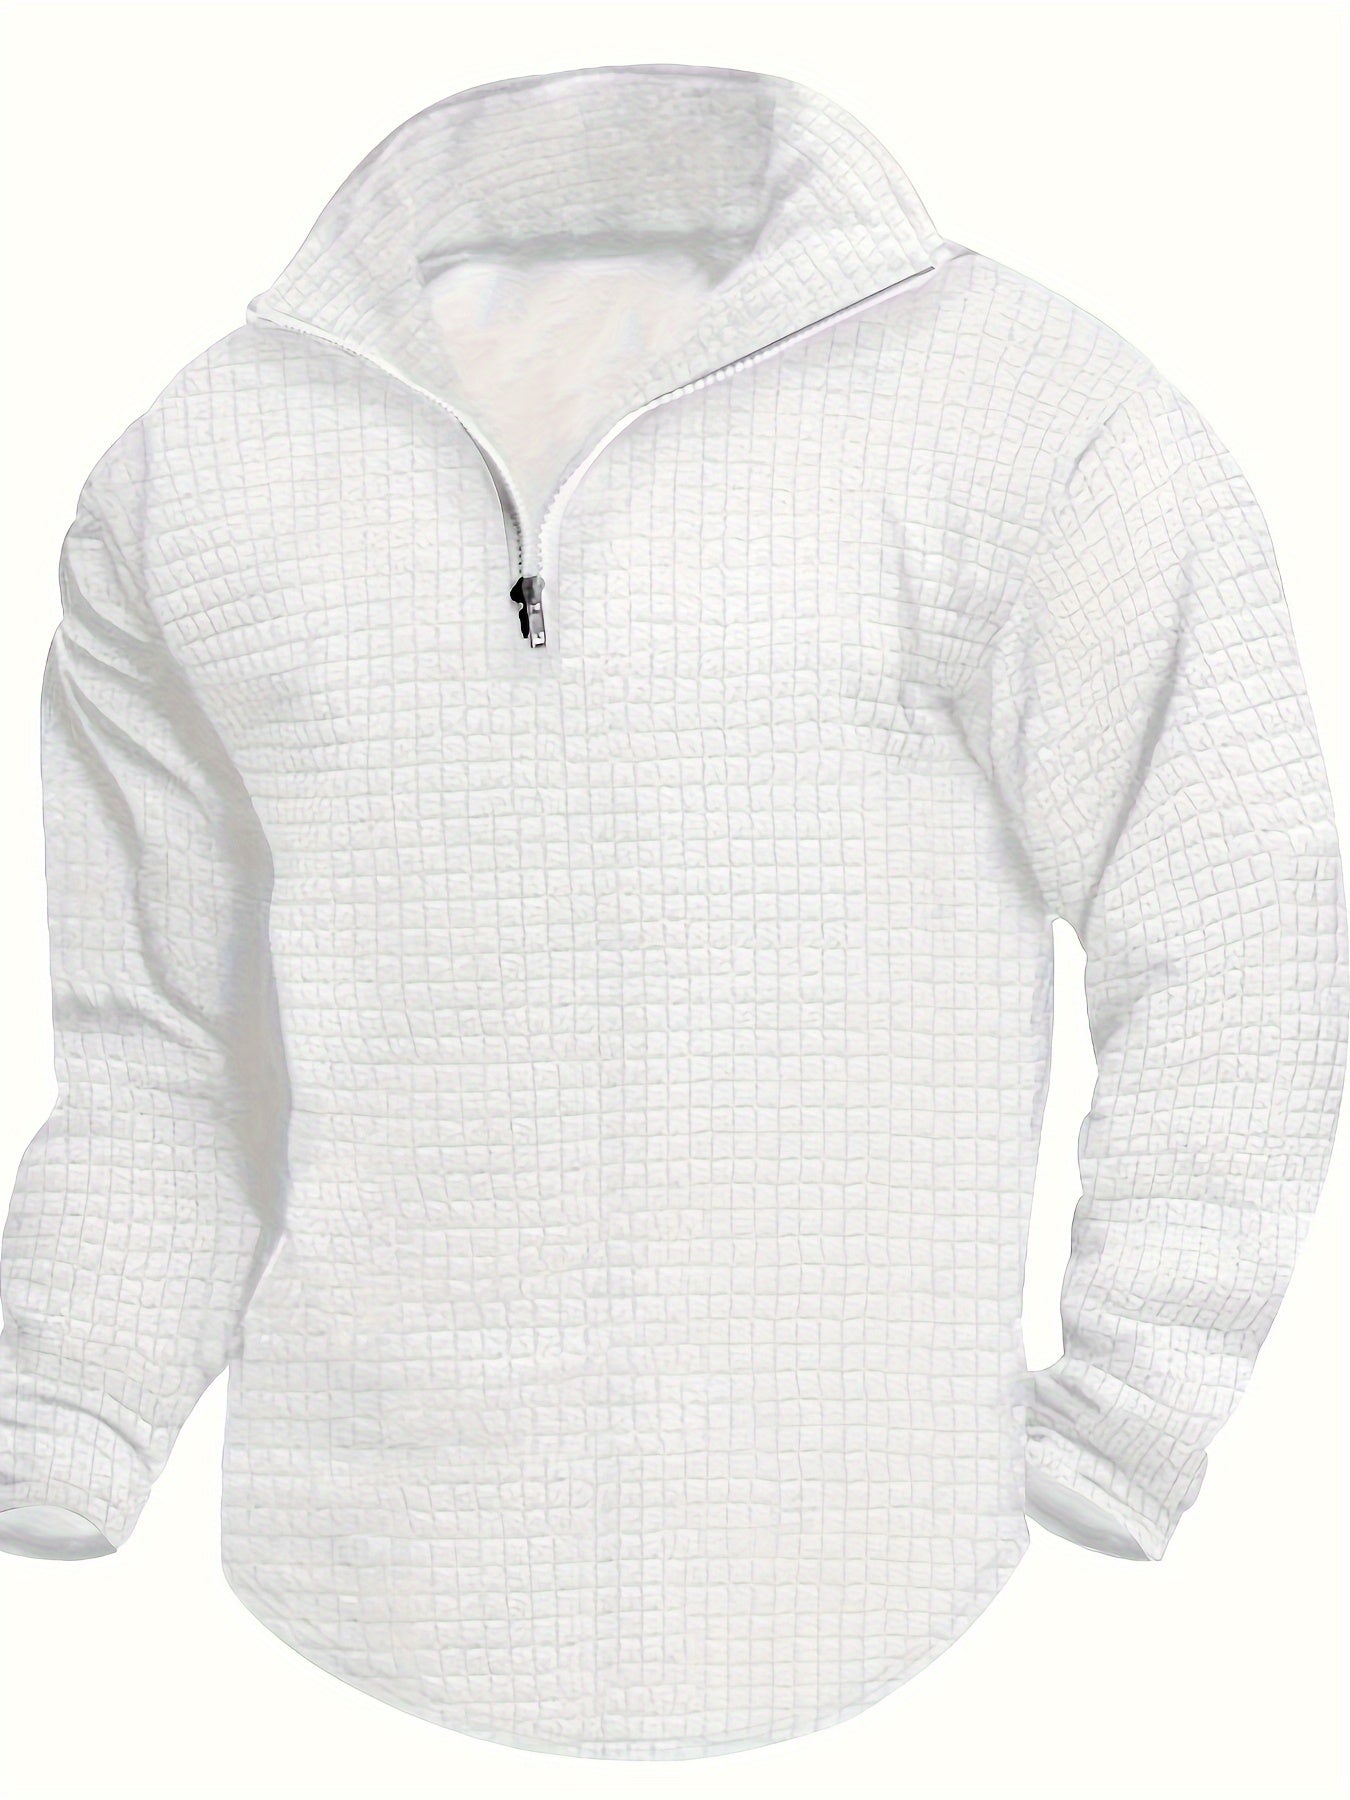 Men's Waffle Half Zipper Stand Collar Sweatshirt For Men Solid Sweatshirts For Winter Fall Long Sleeve Tops